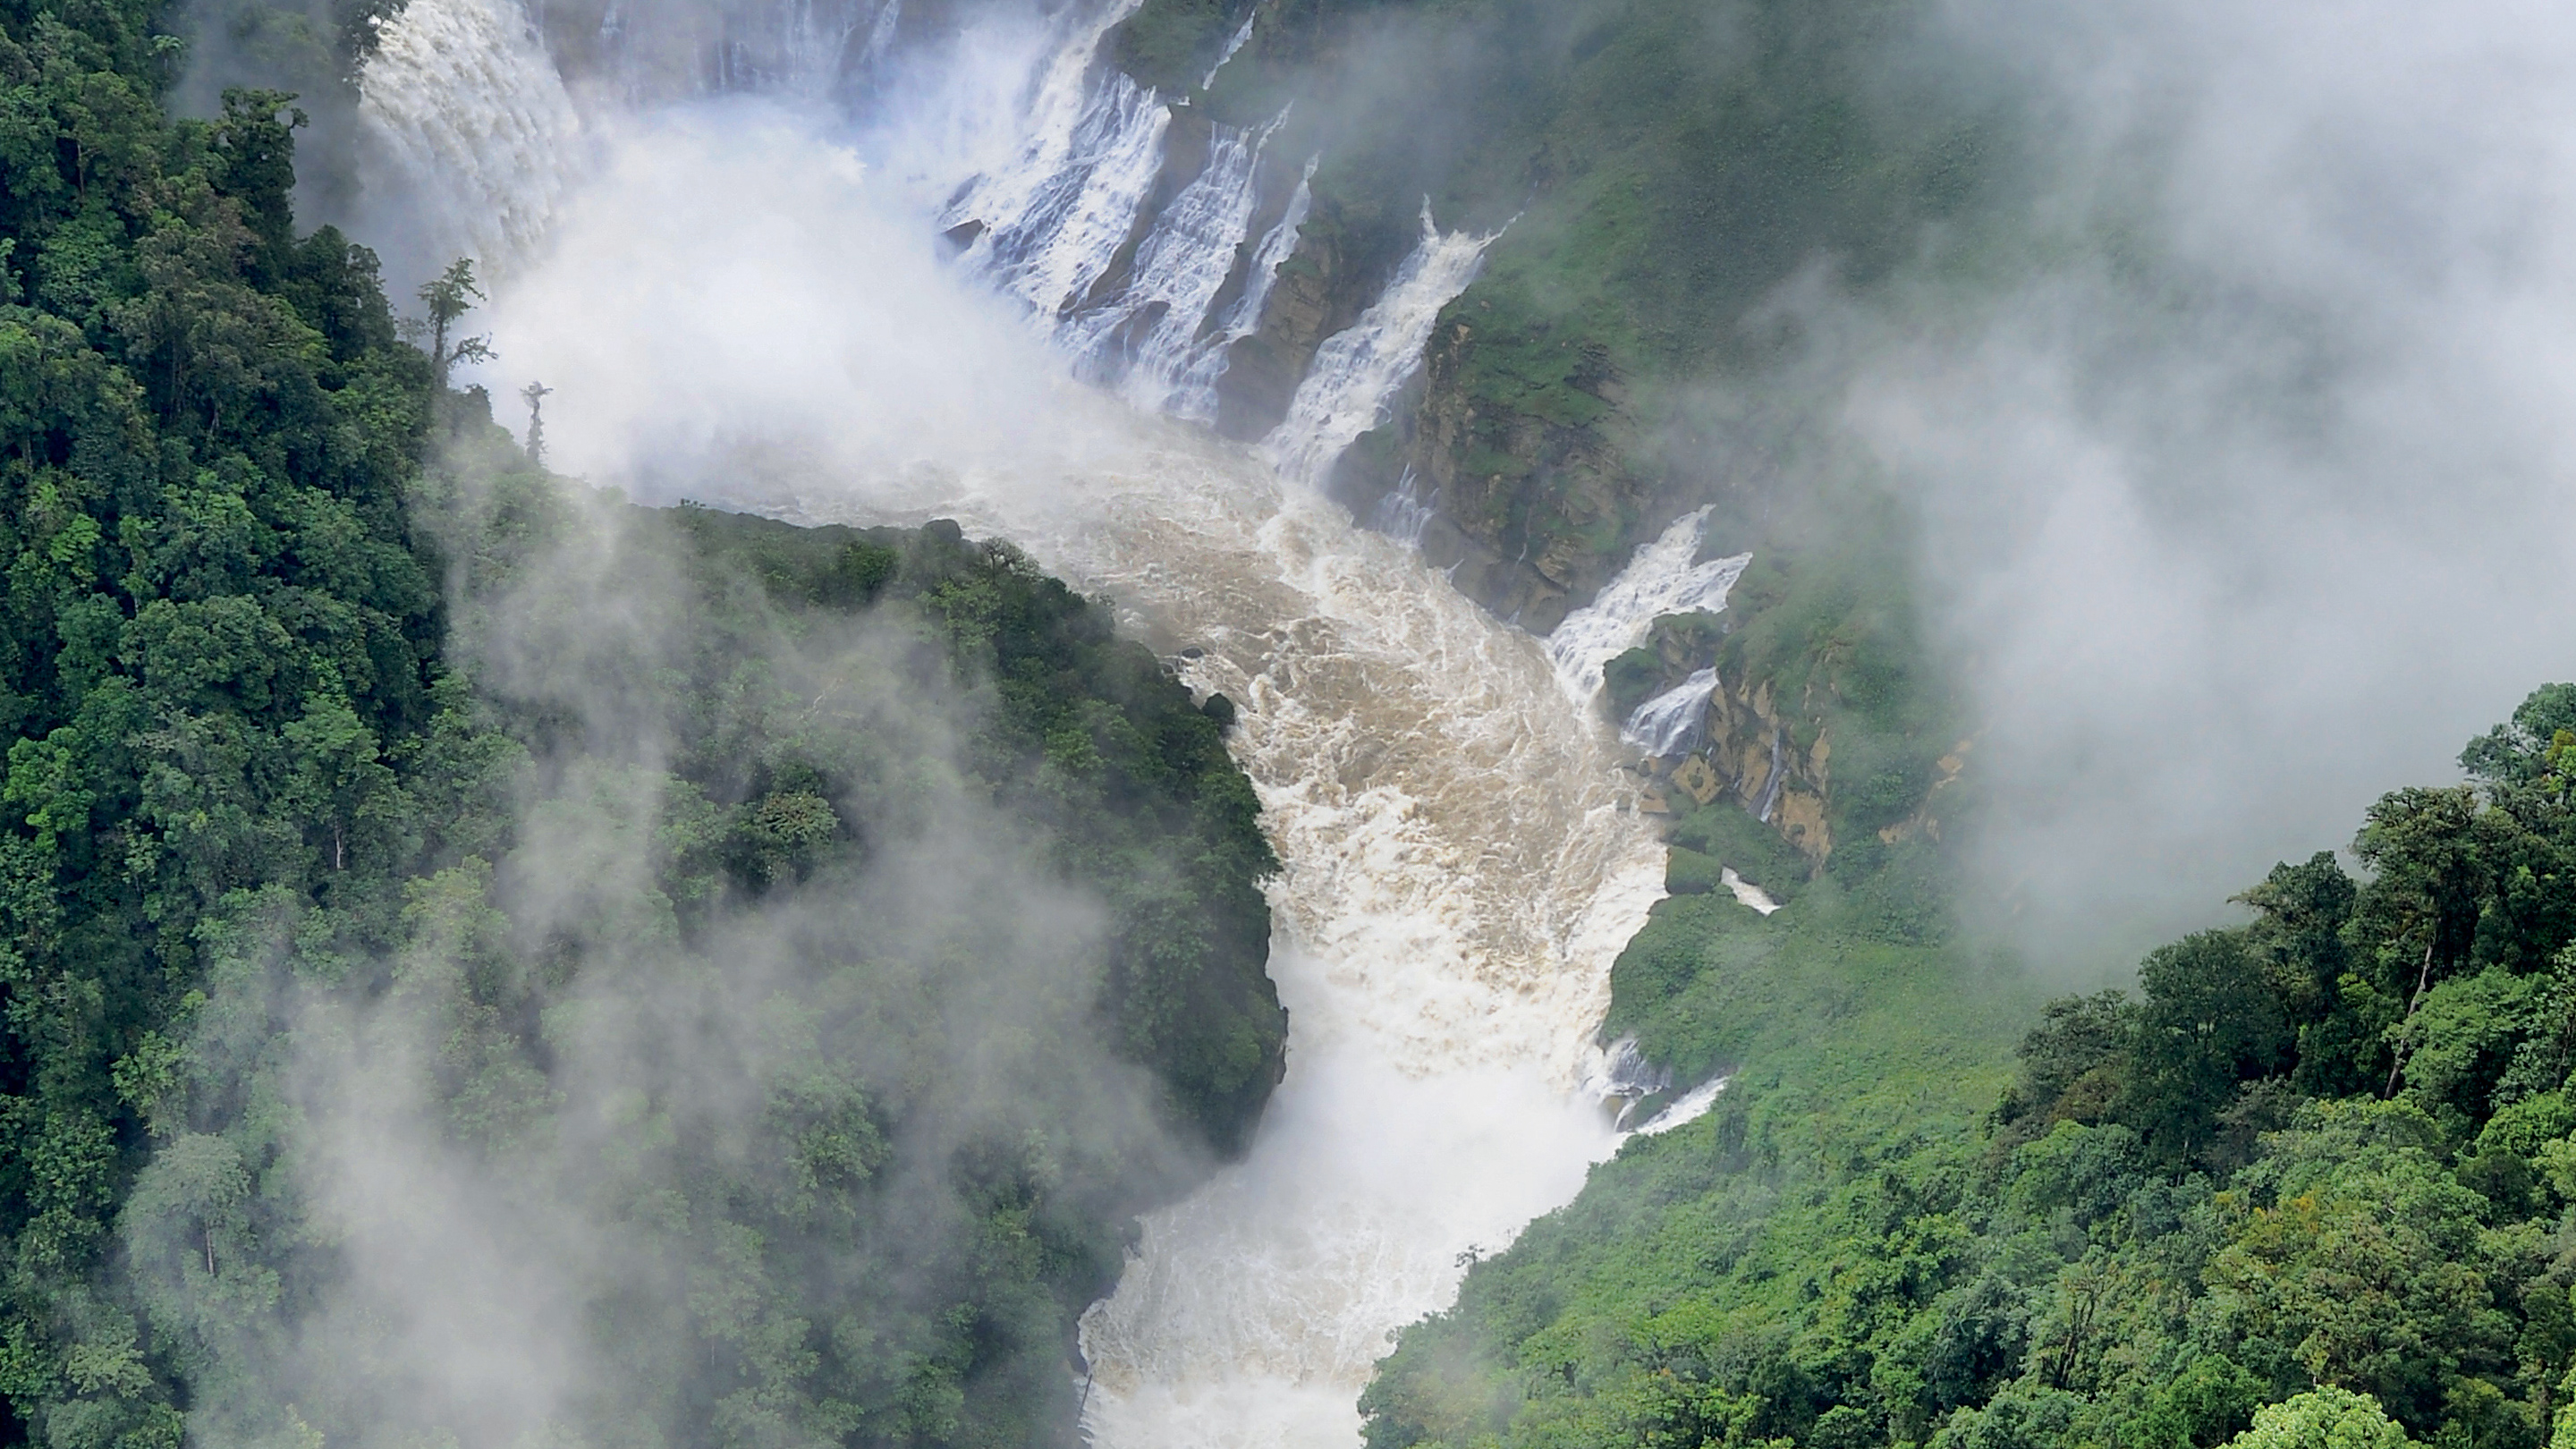 Waterfall in Papa New Guinea